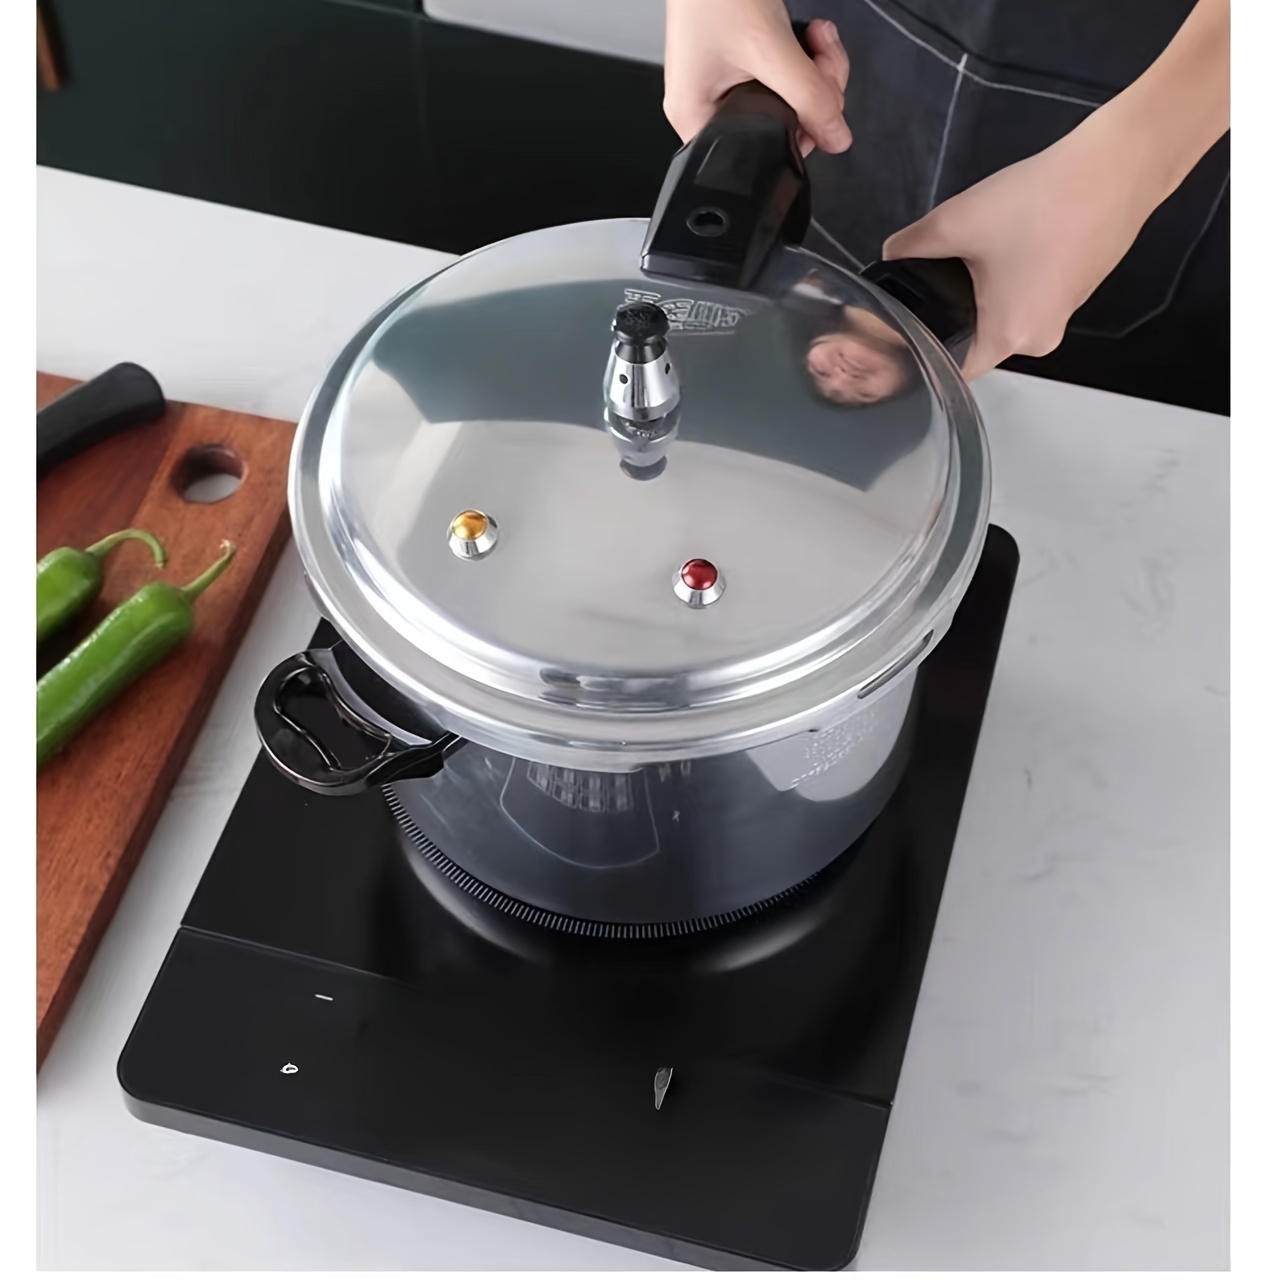 3 Liter Small Pressure Cooker, 3L Aluminium Alloy Pressure Cooker Instant  Cooking Mini Pressure Pot Pressure Canner for Stovetop Gas Stove